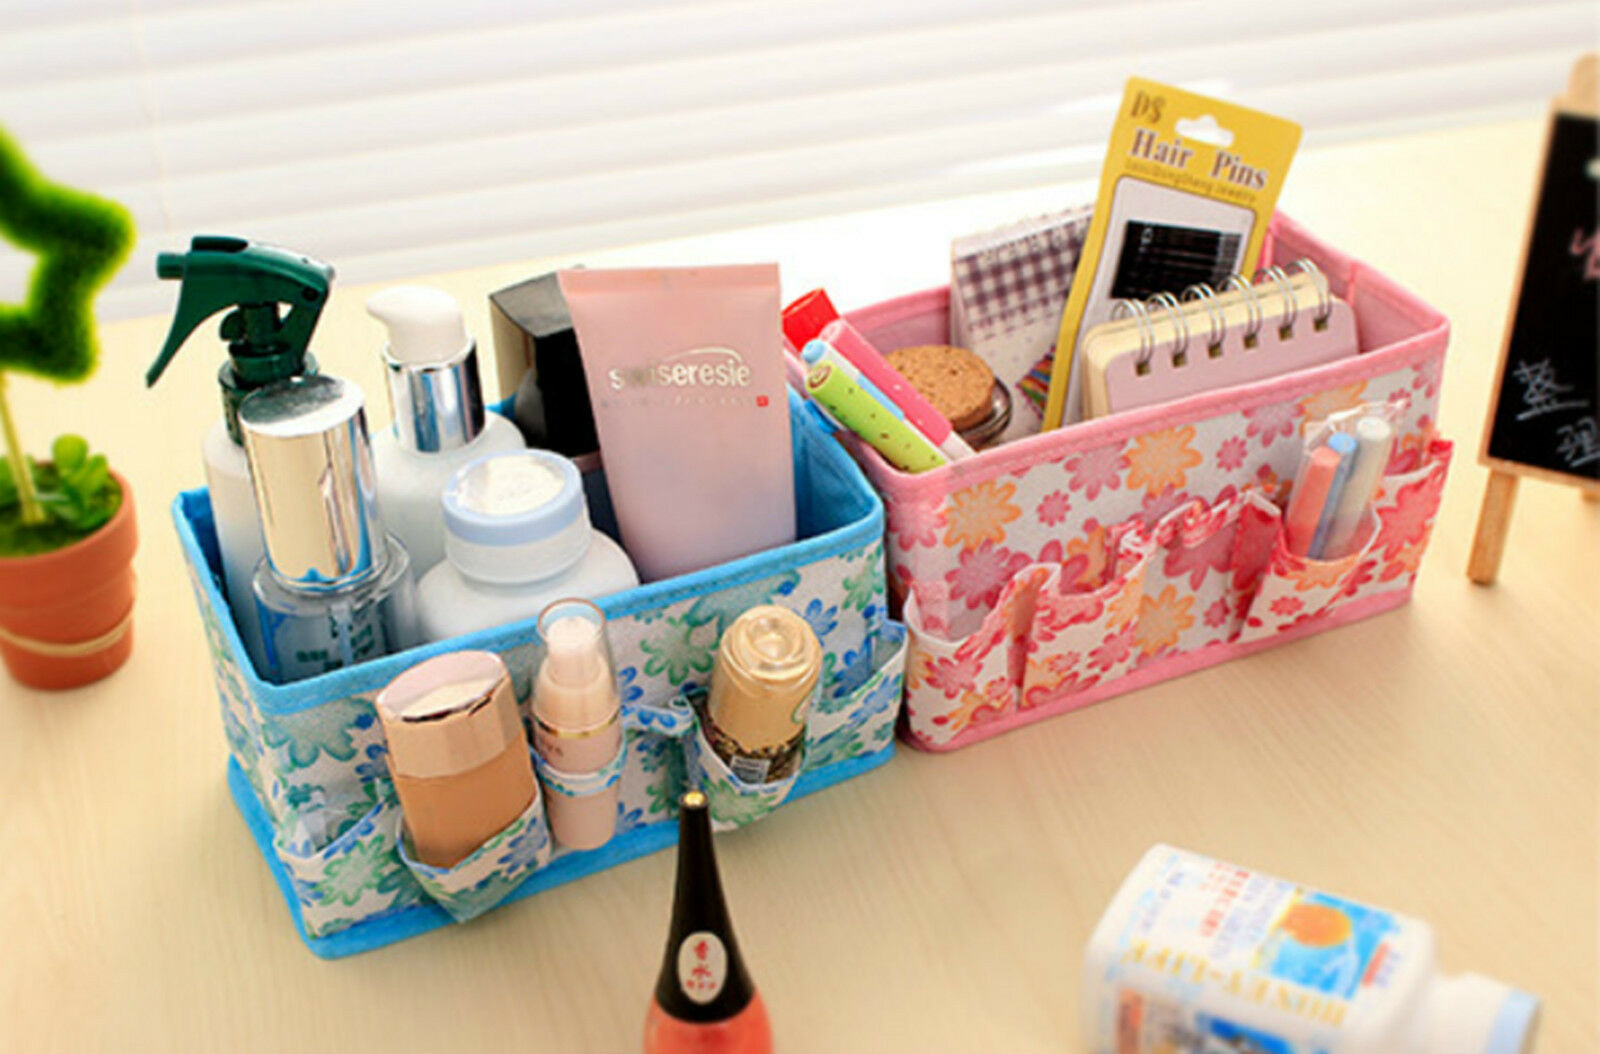 Best ideas about DIY Desk Organizer
. Save or Pin orange Paper Board Cosmetic Storage Box DIY Makeup Desk Now.